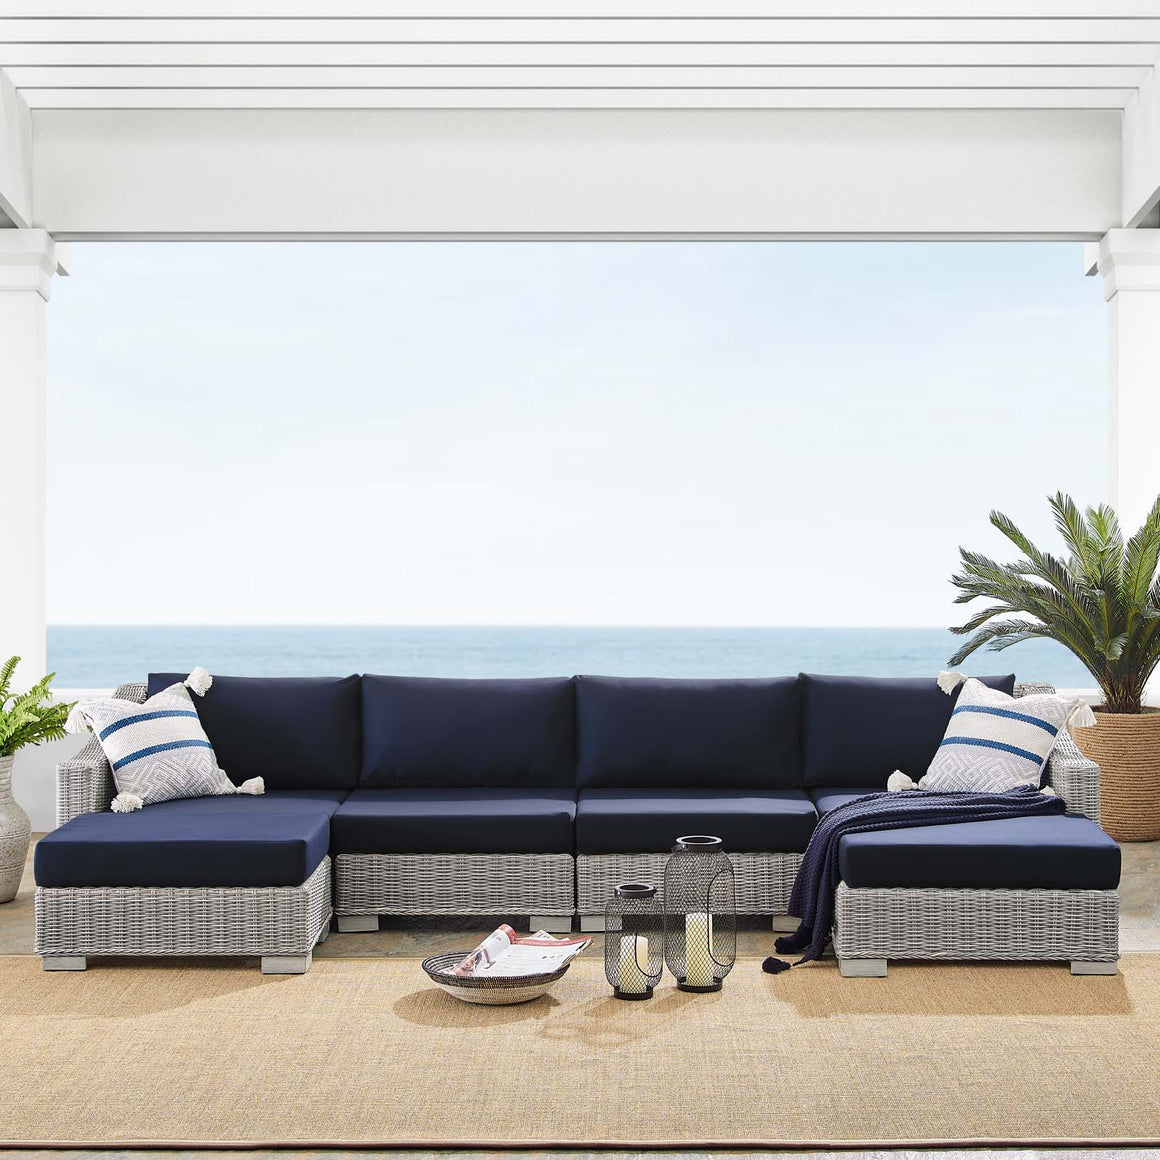 Conway Sunbrella® Outdoor Patio Wicker Rattan 6-Piece Furniture Set in Light Gray White